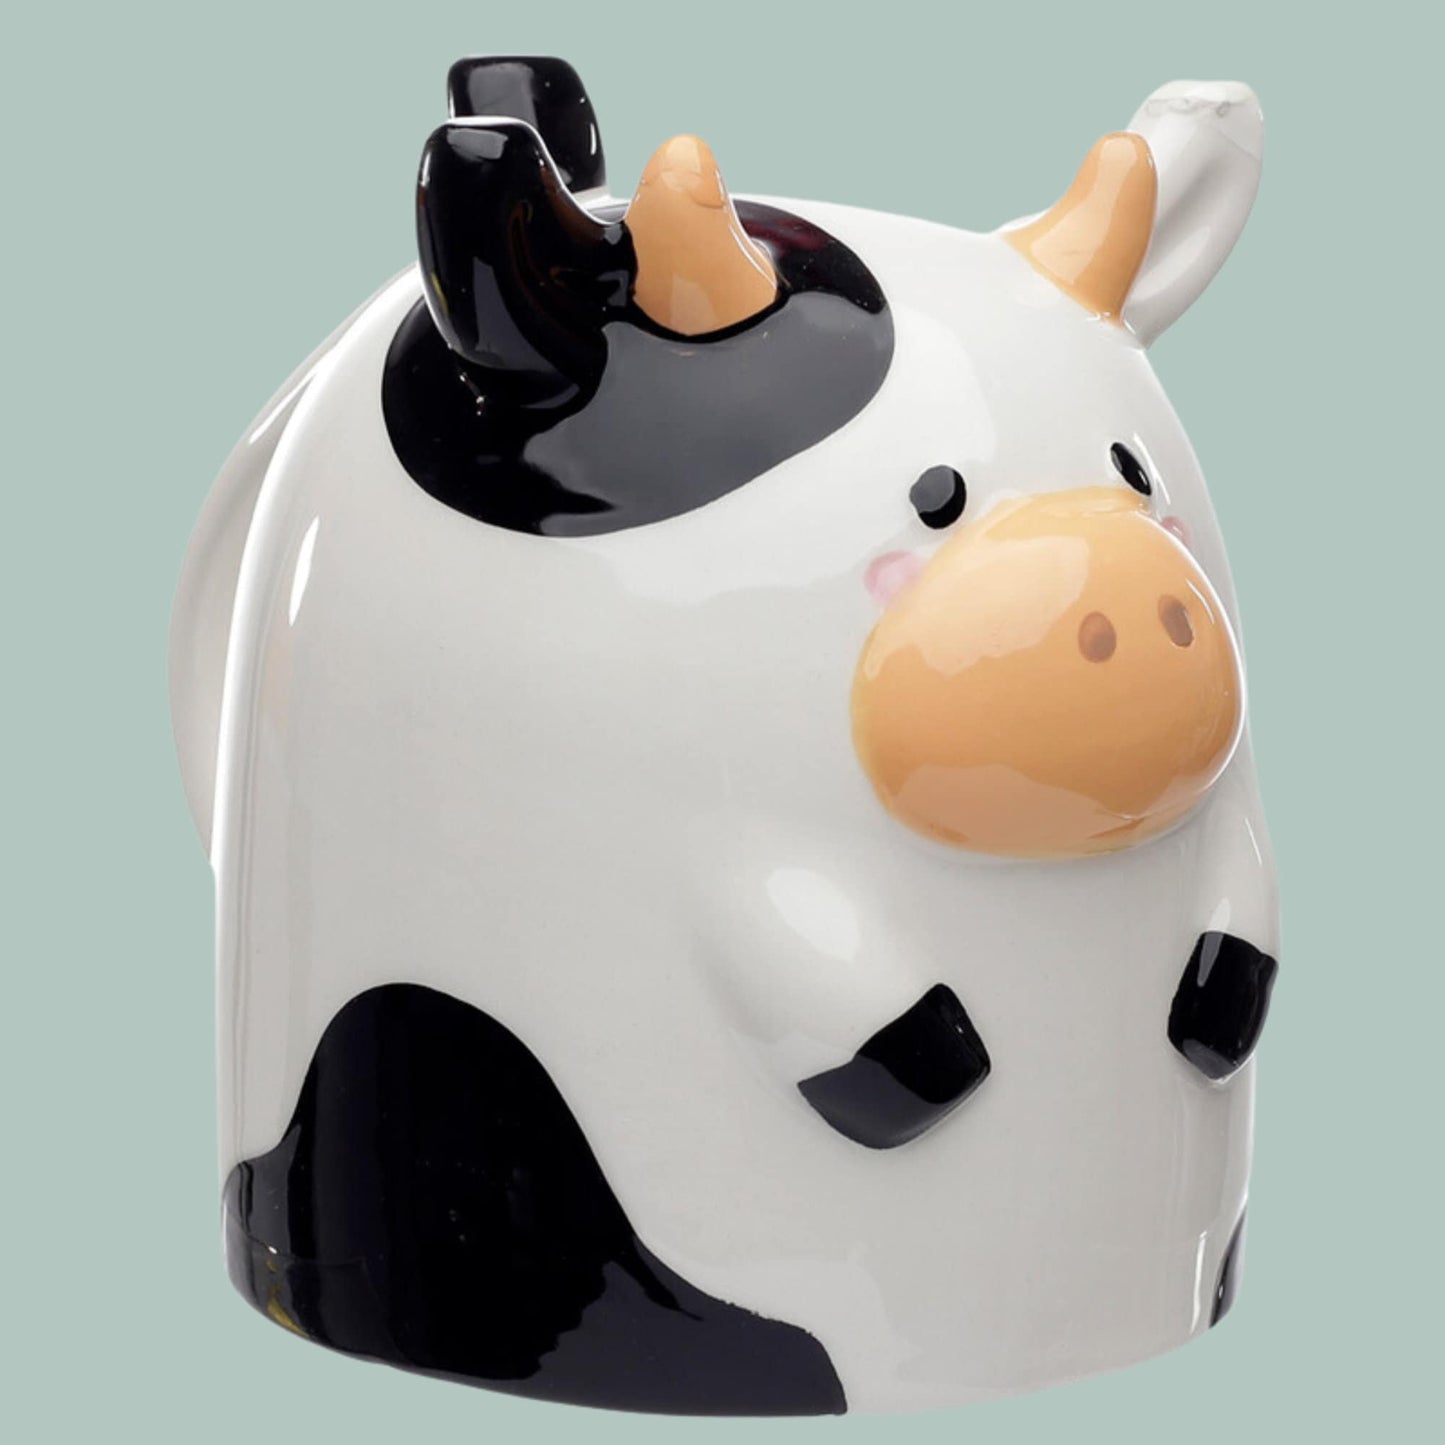 Upside Down Bull Mug Novelty Ceramic Mug Cow Lover Gift Present For Animal Lover Bramley Bunch Farm Drinkware Collectable Upside Down Mug